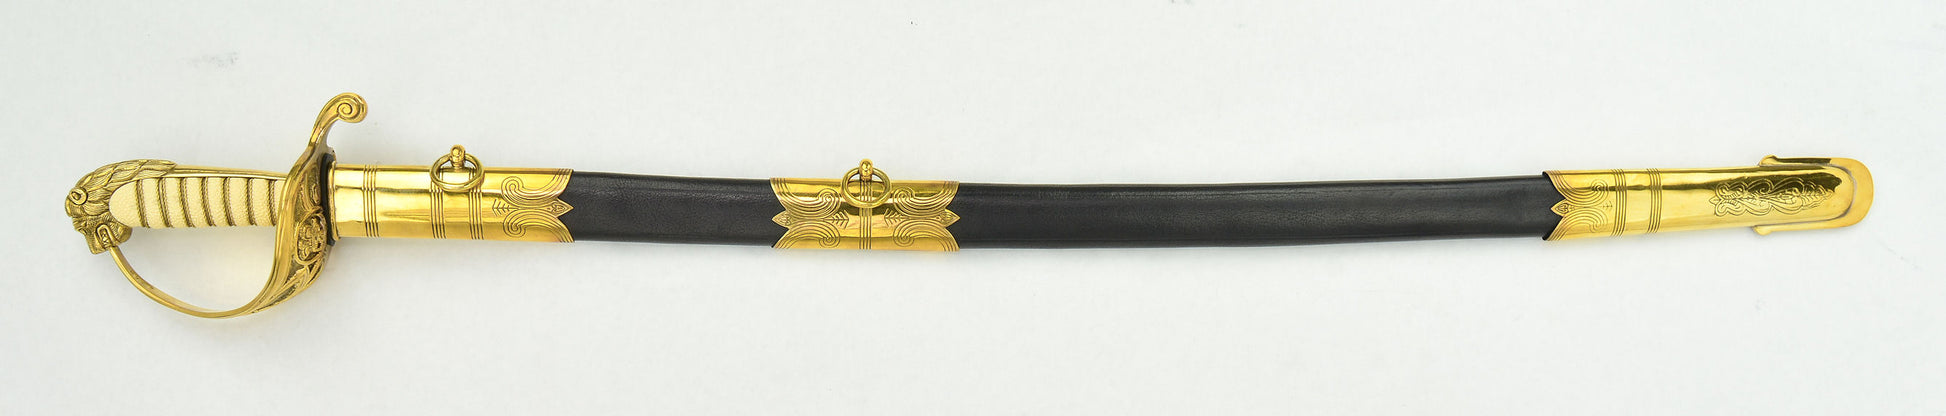 British Royal Navy Dress Saber with Pipe-Back Blade